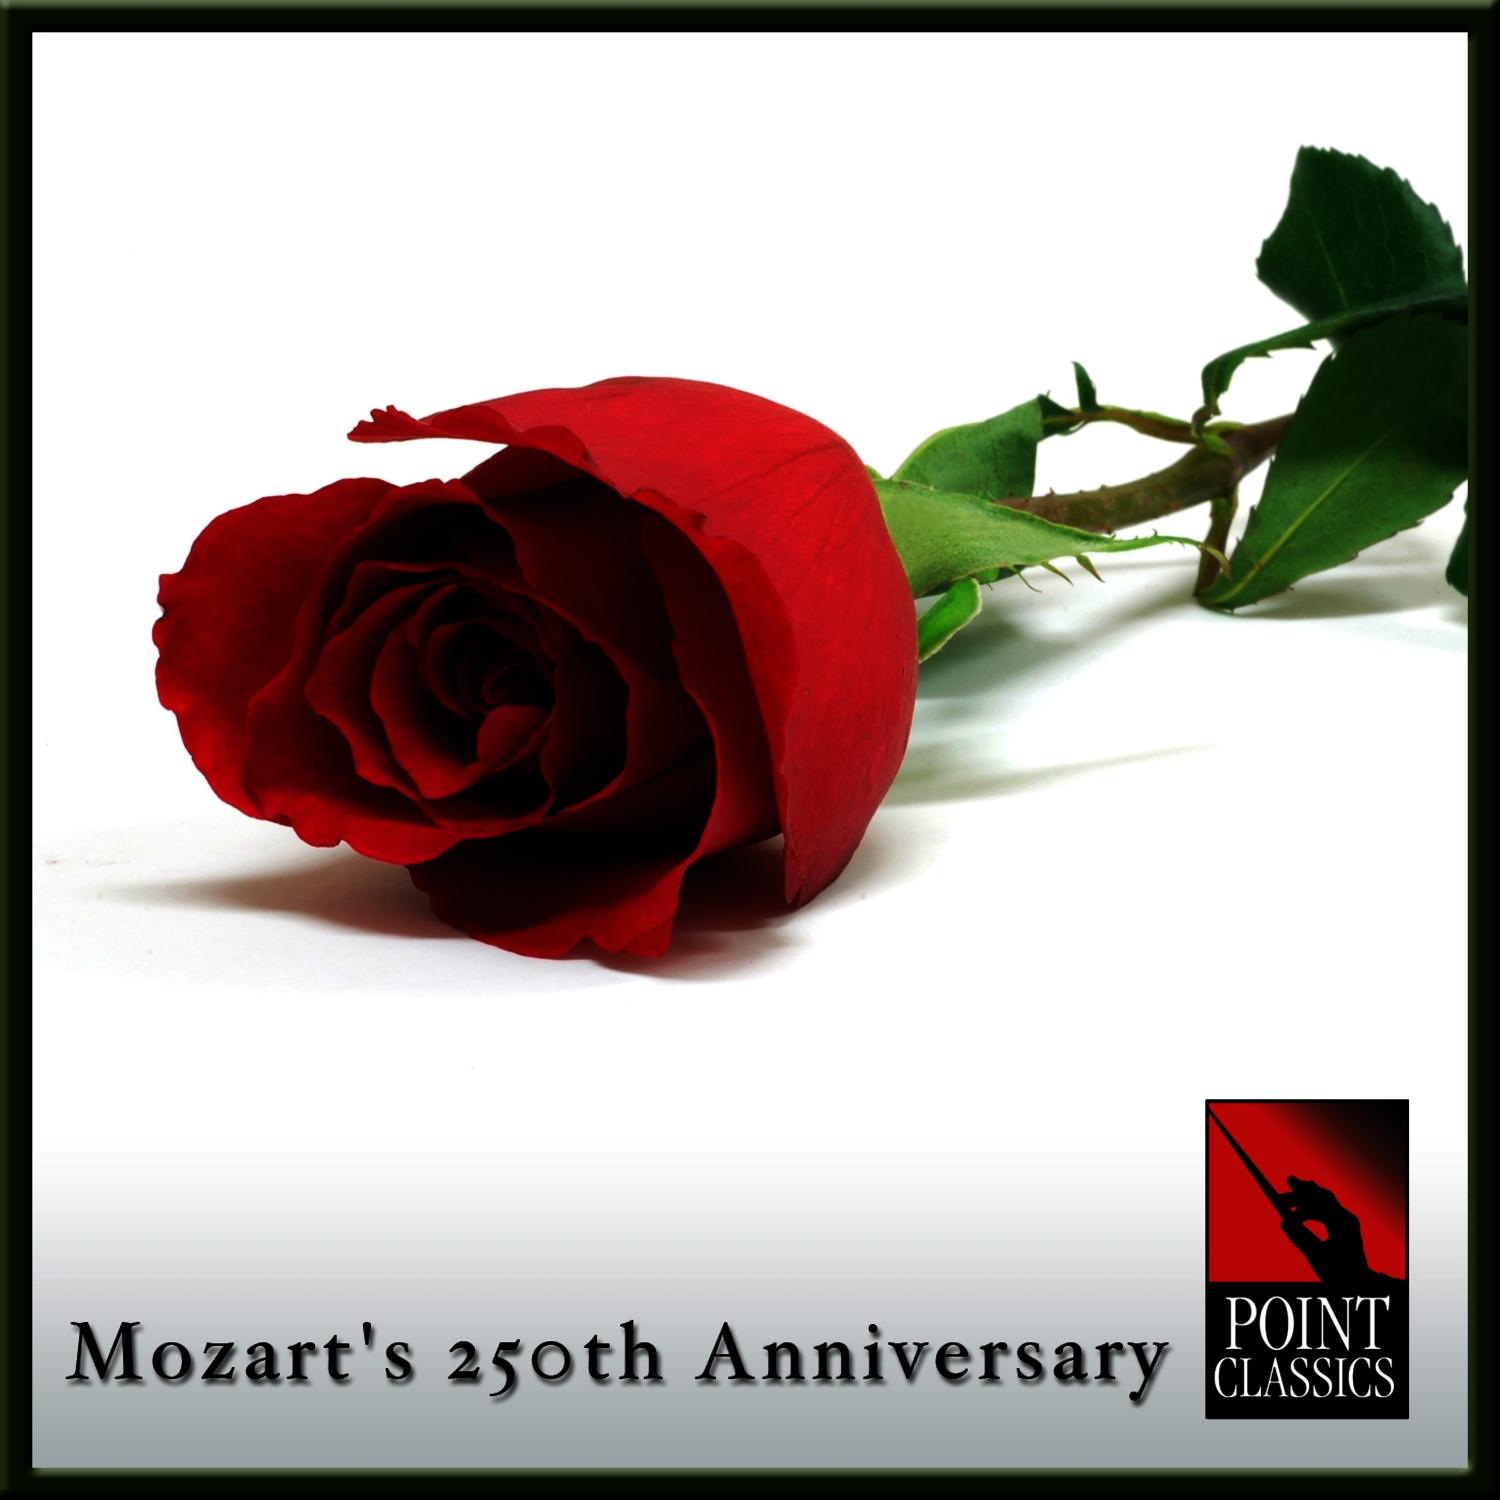 Mozart's 250th Anniversary